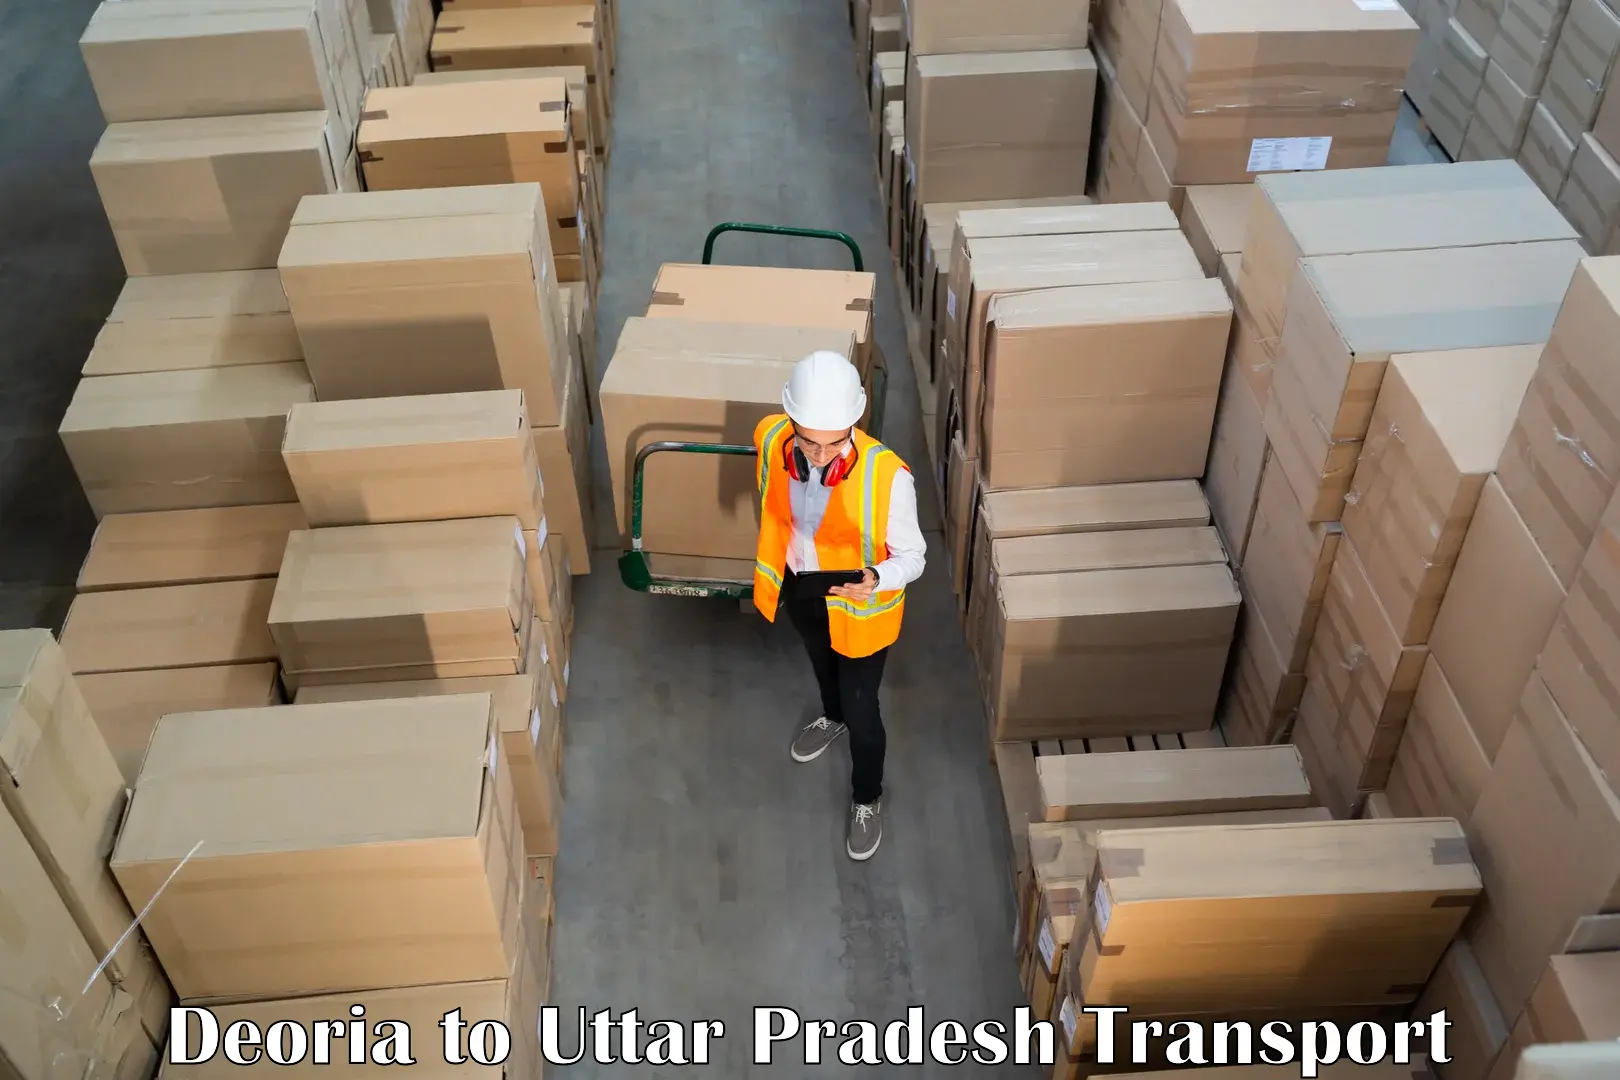 Shipping partner Deoria to Manda